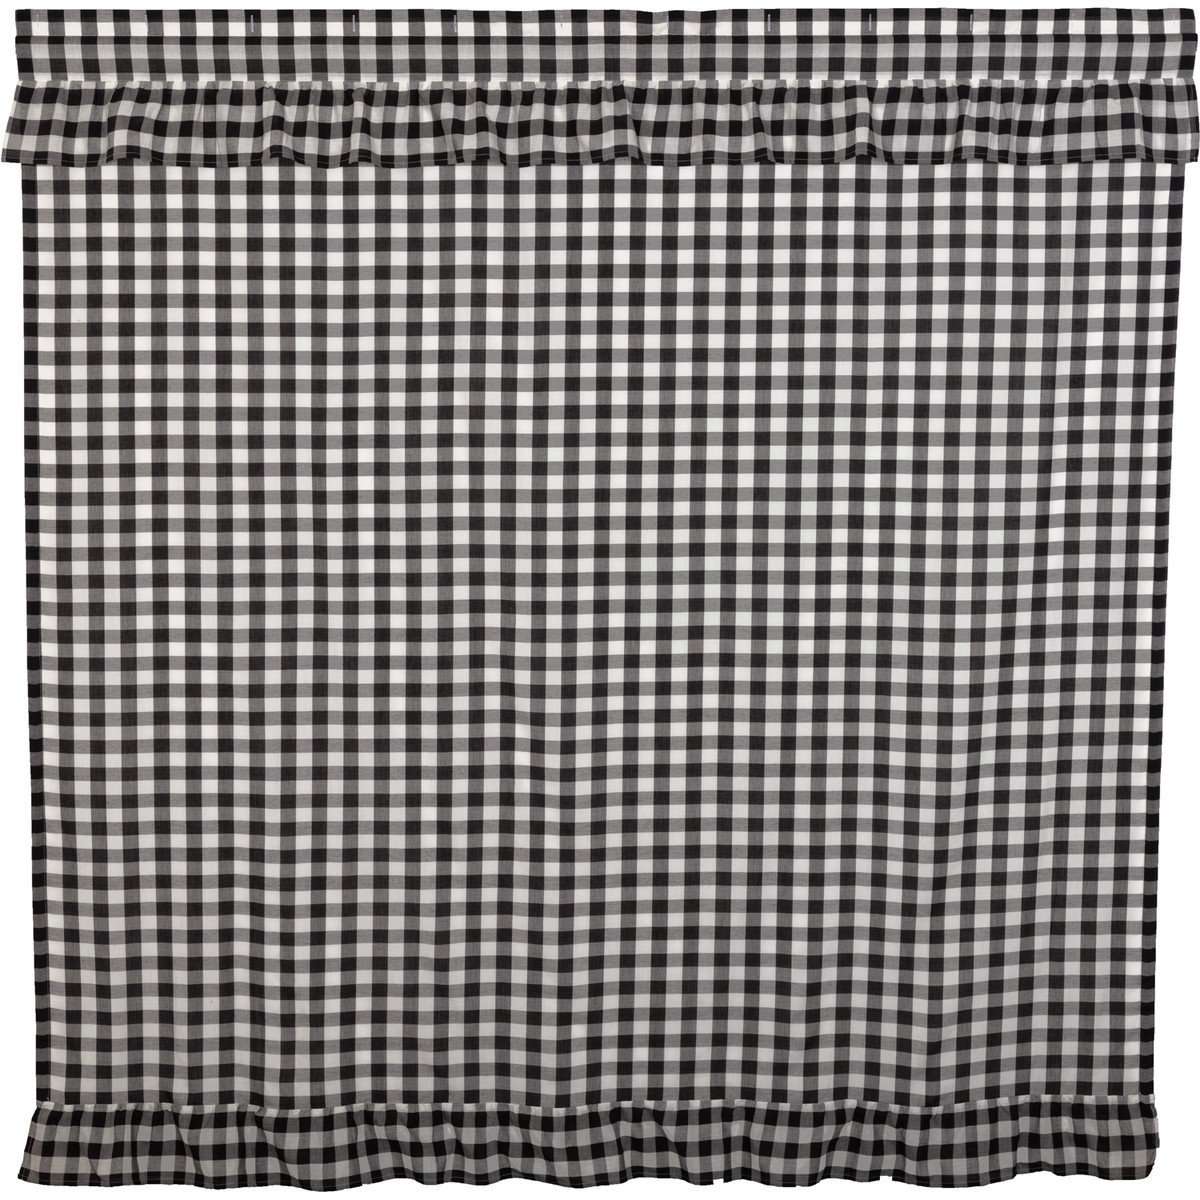 Annie Buffalo Black/Red Check Ruffled Shower Curtain 72"x72" curtain VHC Brands 